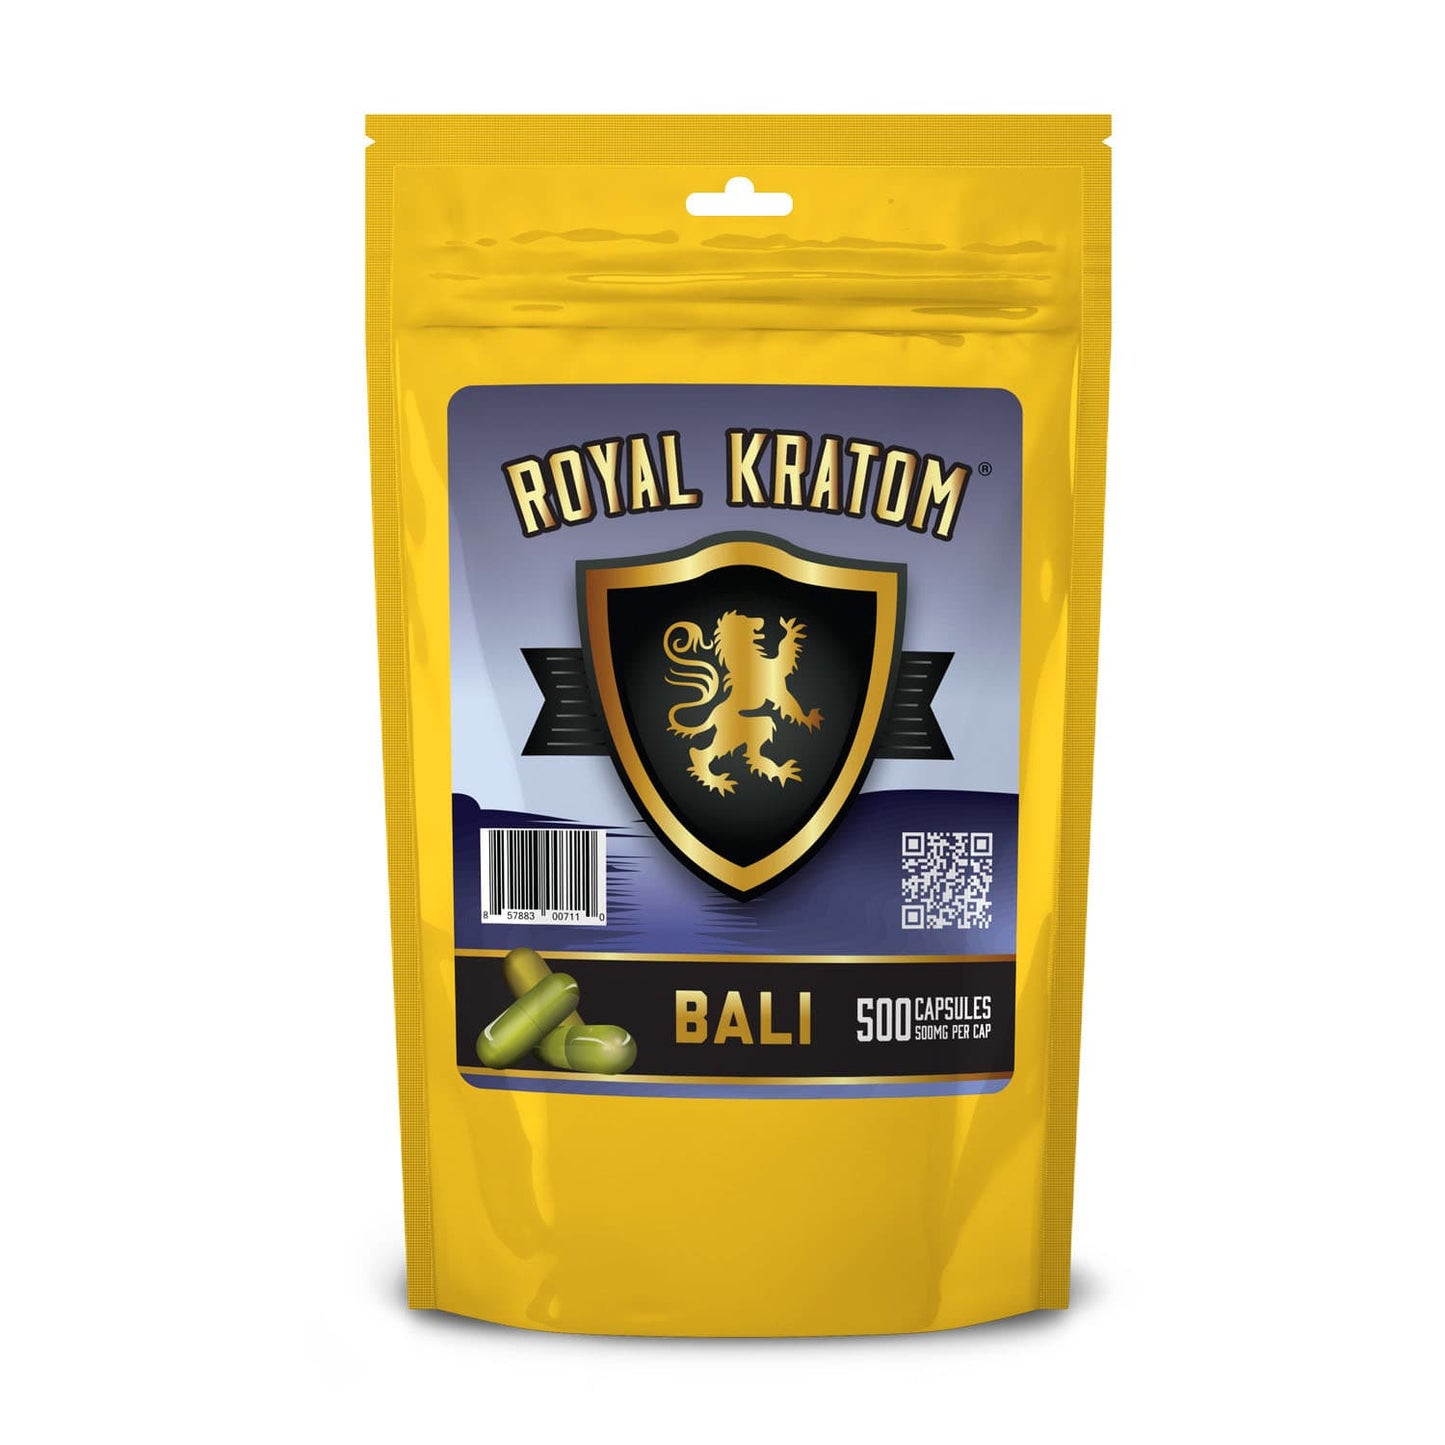 Royal Kratom Bali Kratom Capsules 500 count package